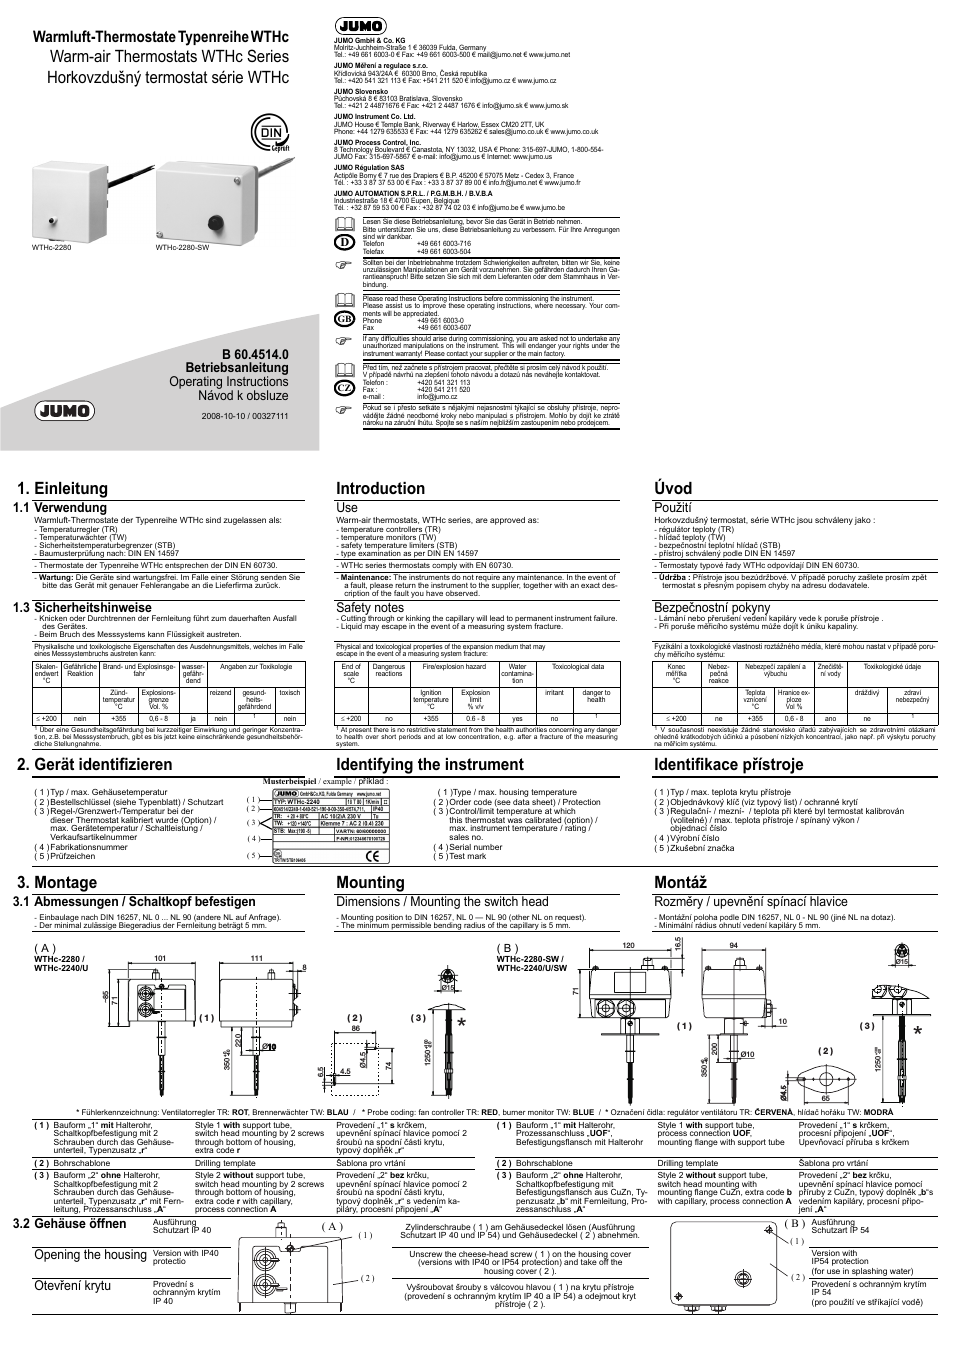 60.4514 Hot air thermostats, WTHc Operating Manual